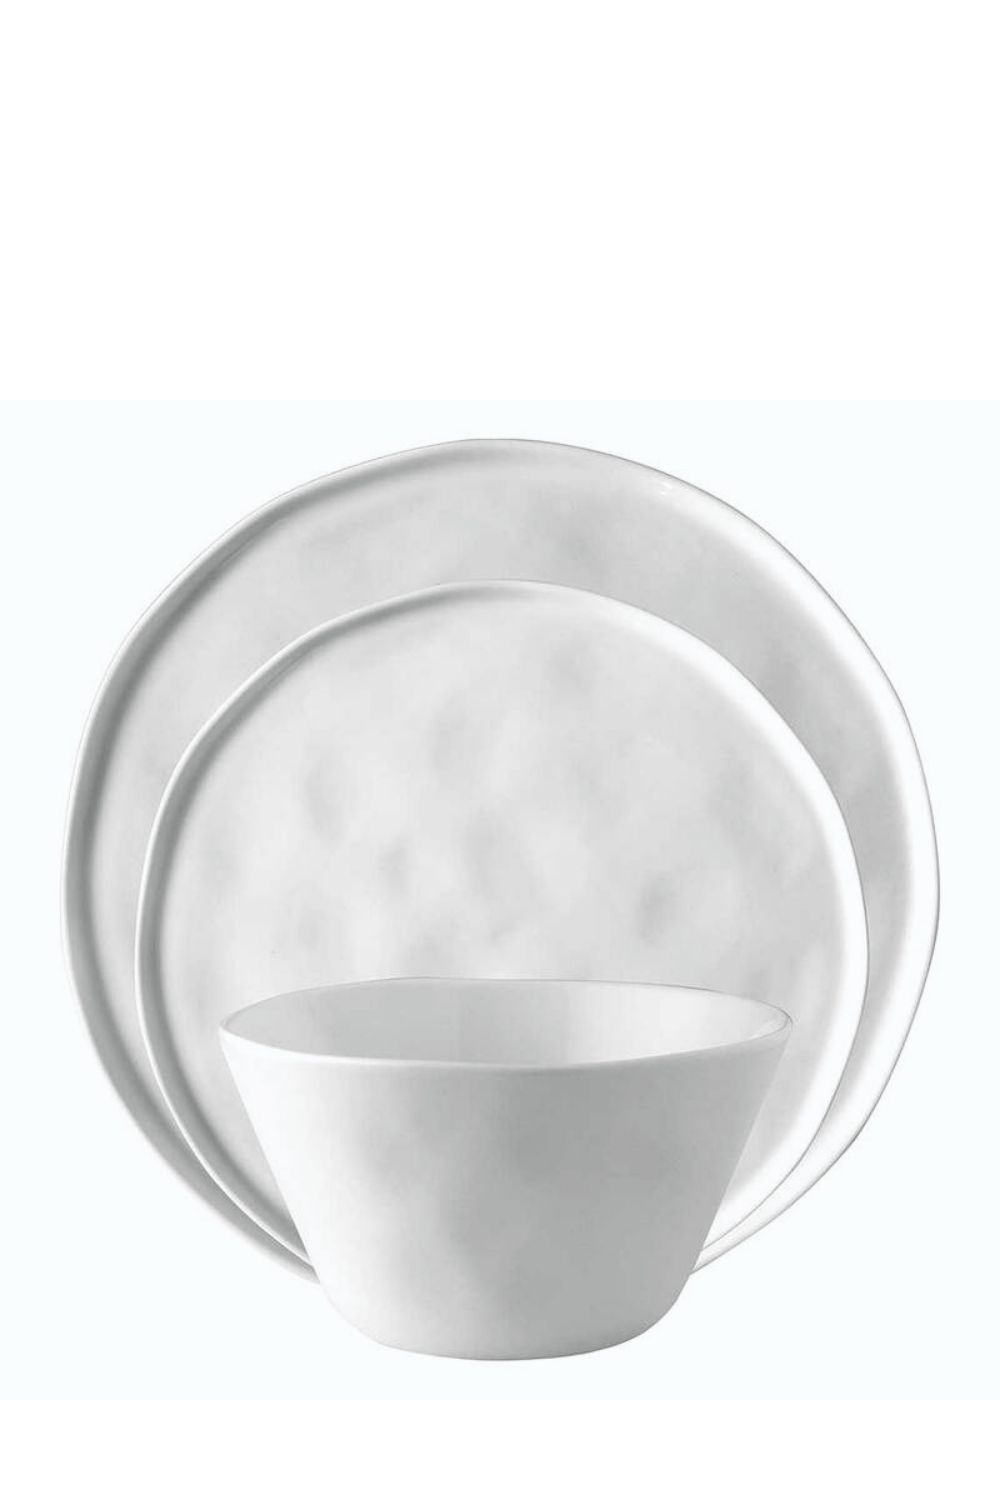 white-irregular-plates